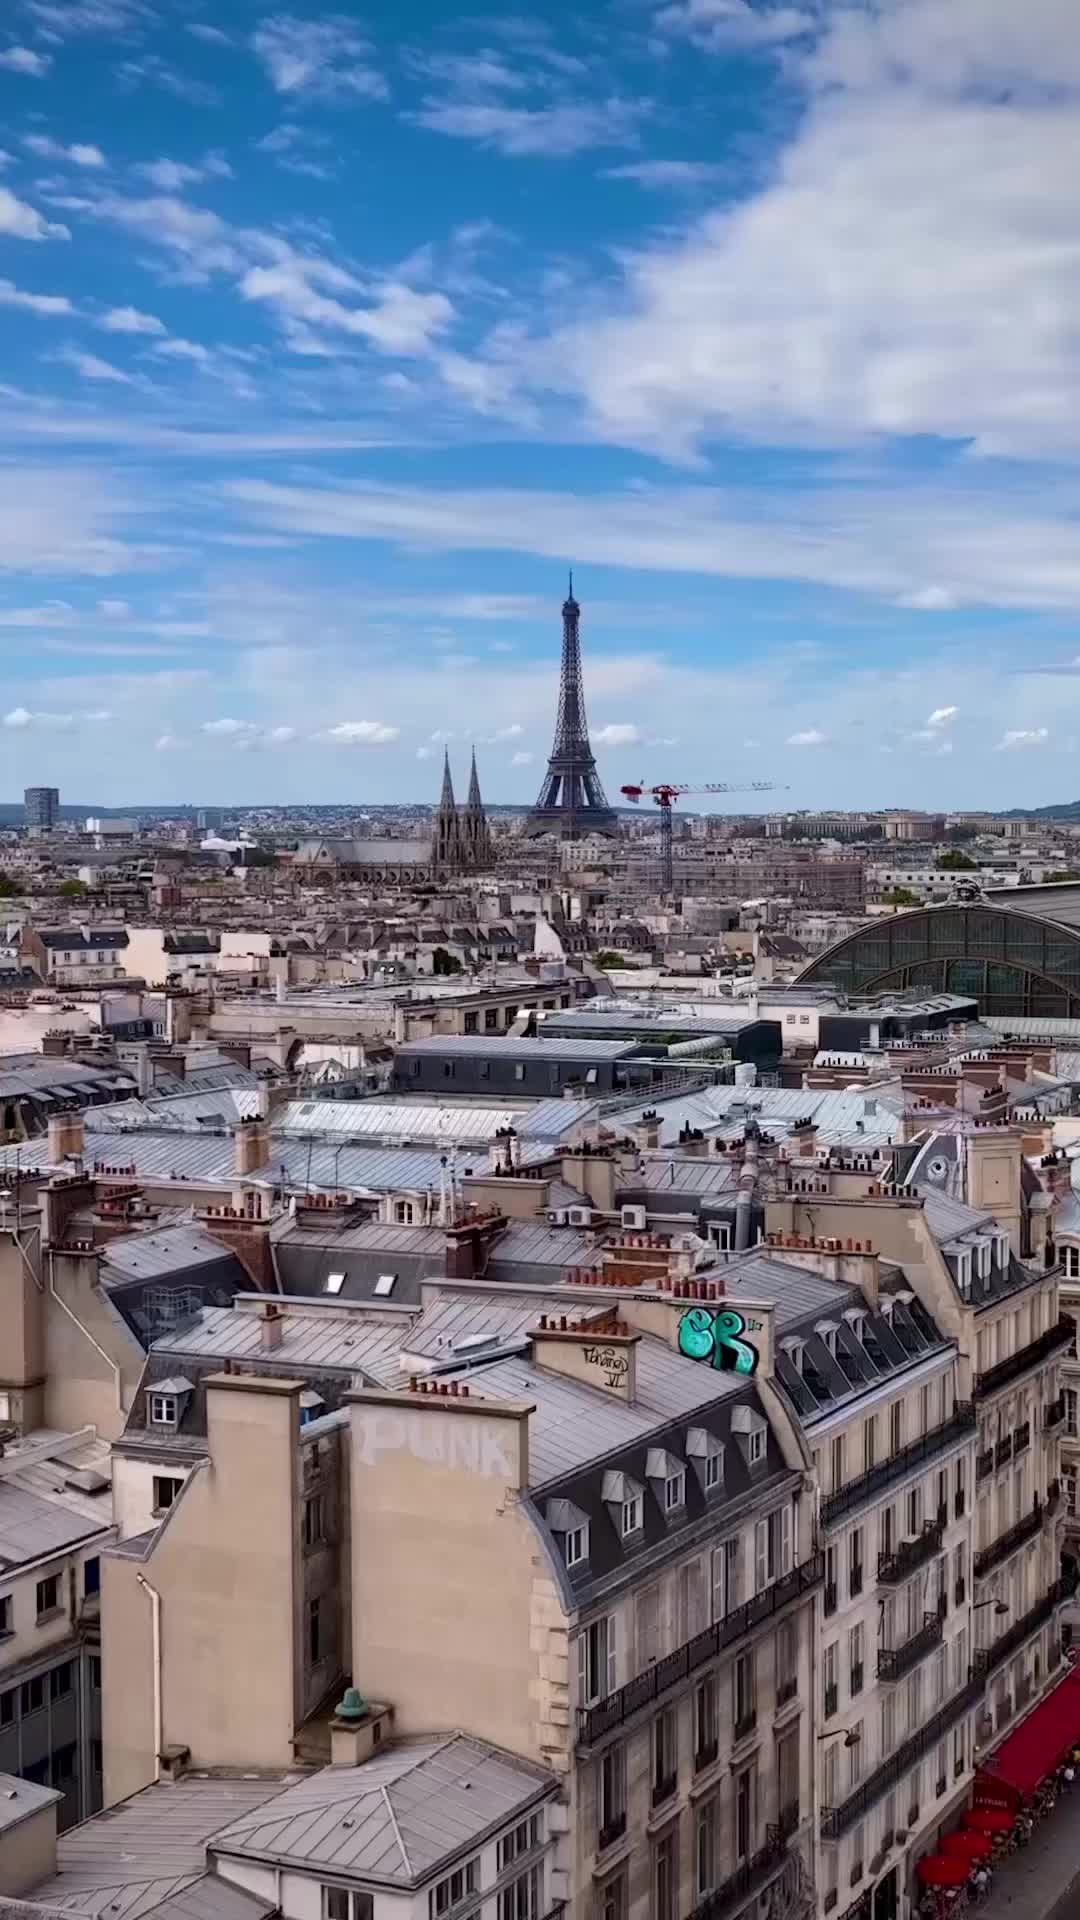 Explore Paris: A Bird's-Eye View of the Eiffel Tower